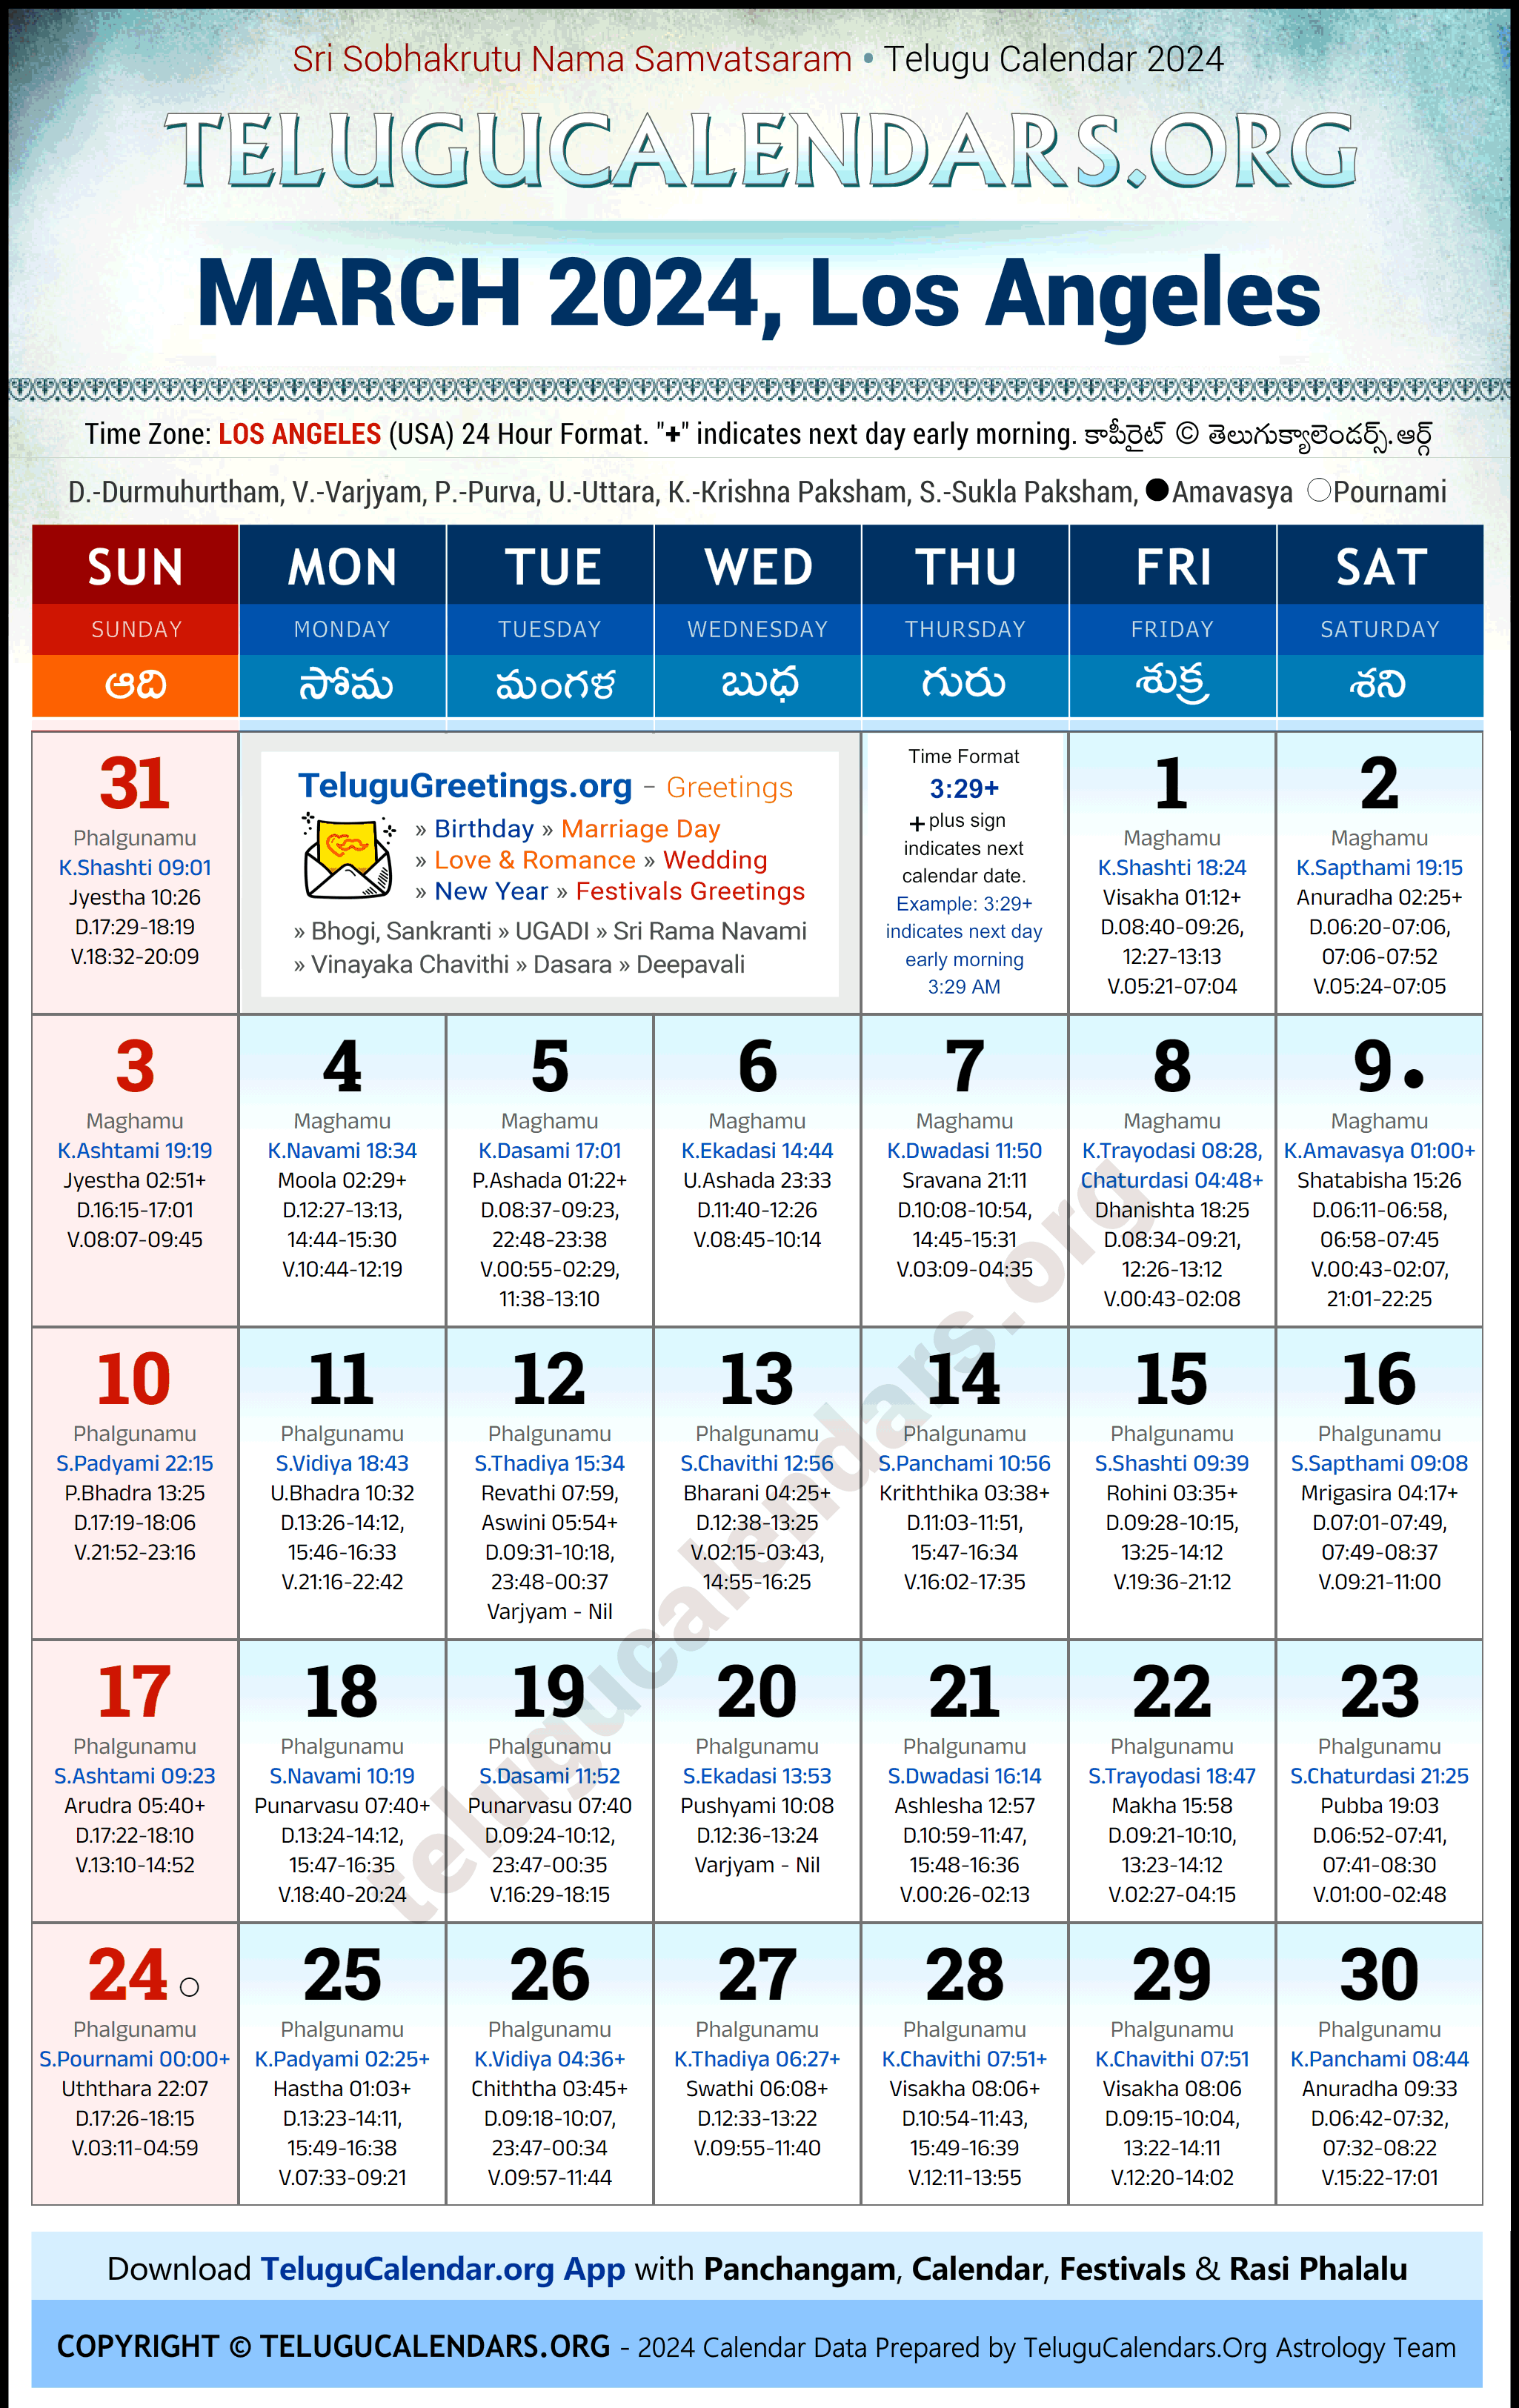 Telugu Calendar 2024 March Festivals for Los Angeles